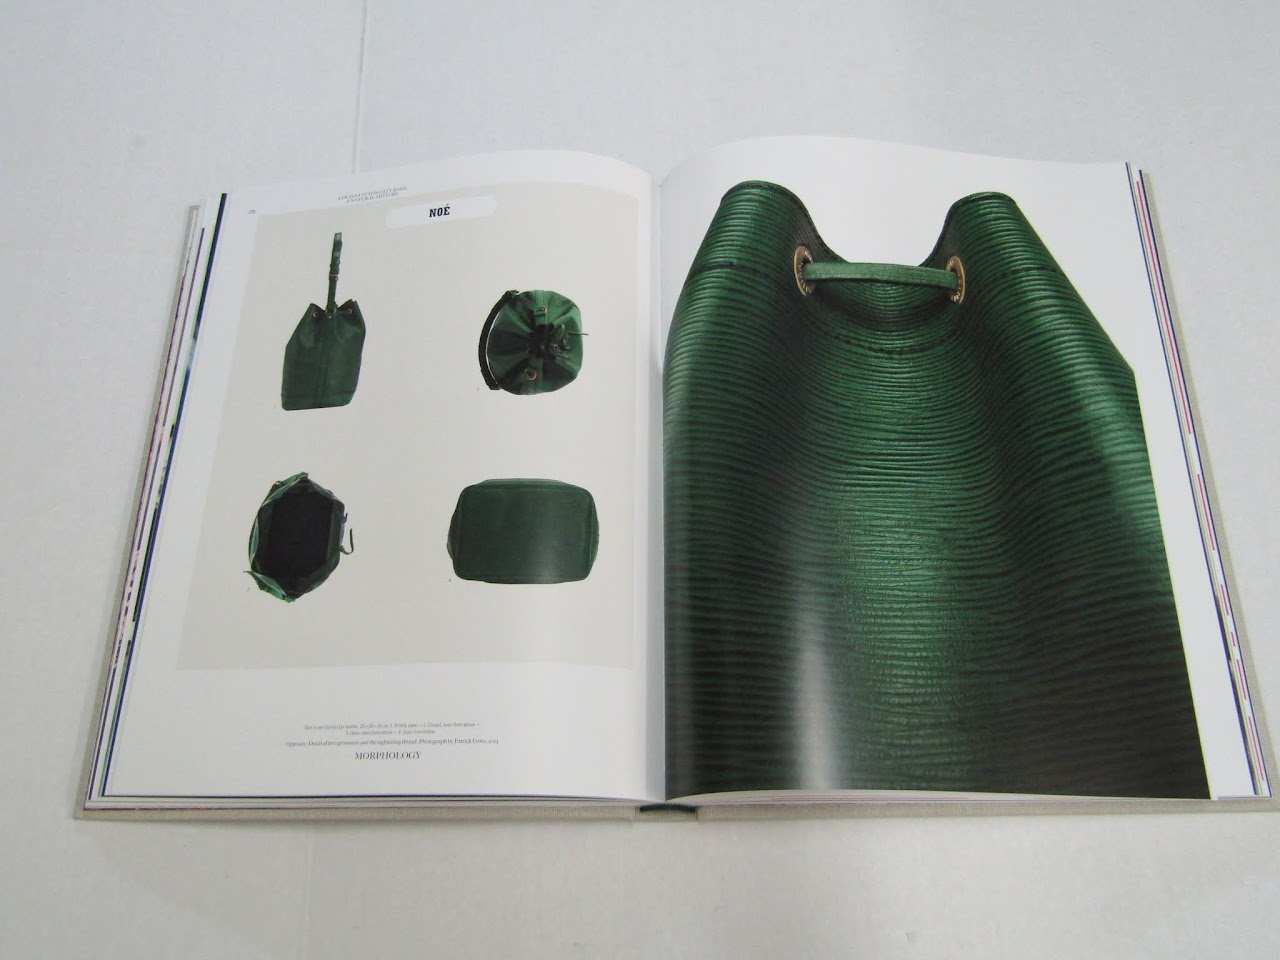 Louis Vuitton Louis Vuitton City Bags: A Natural History - Green